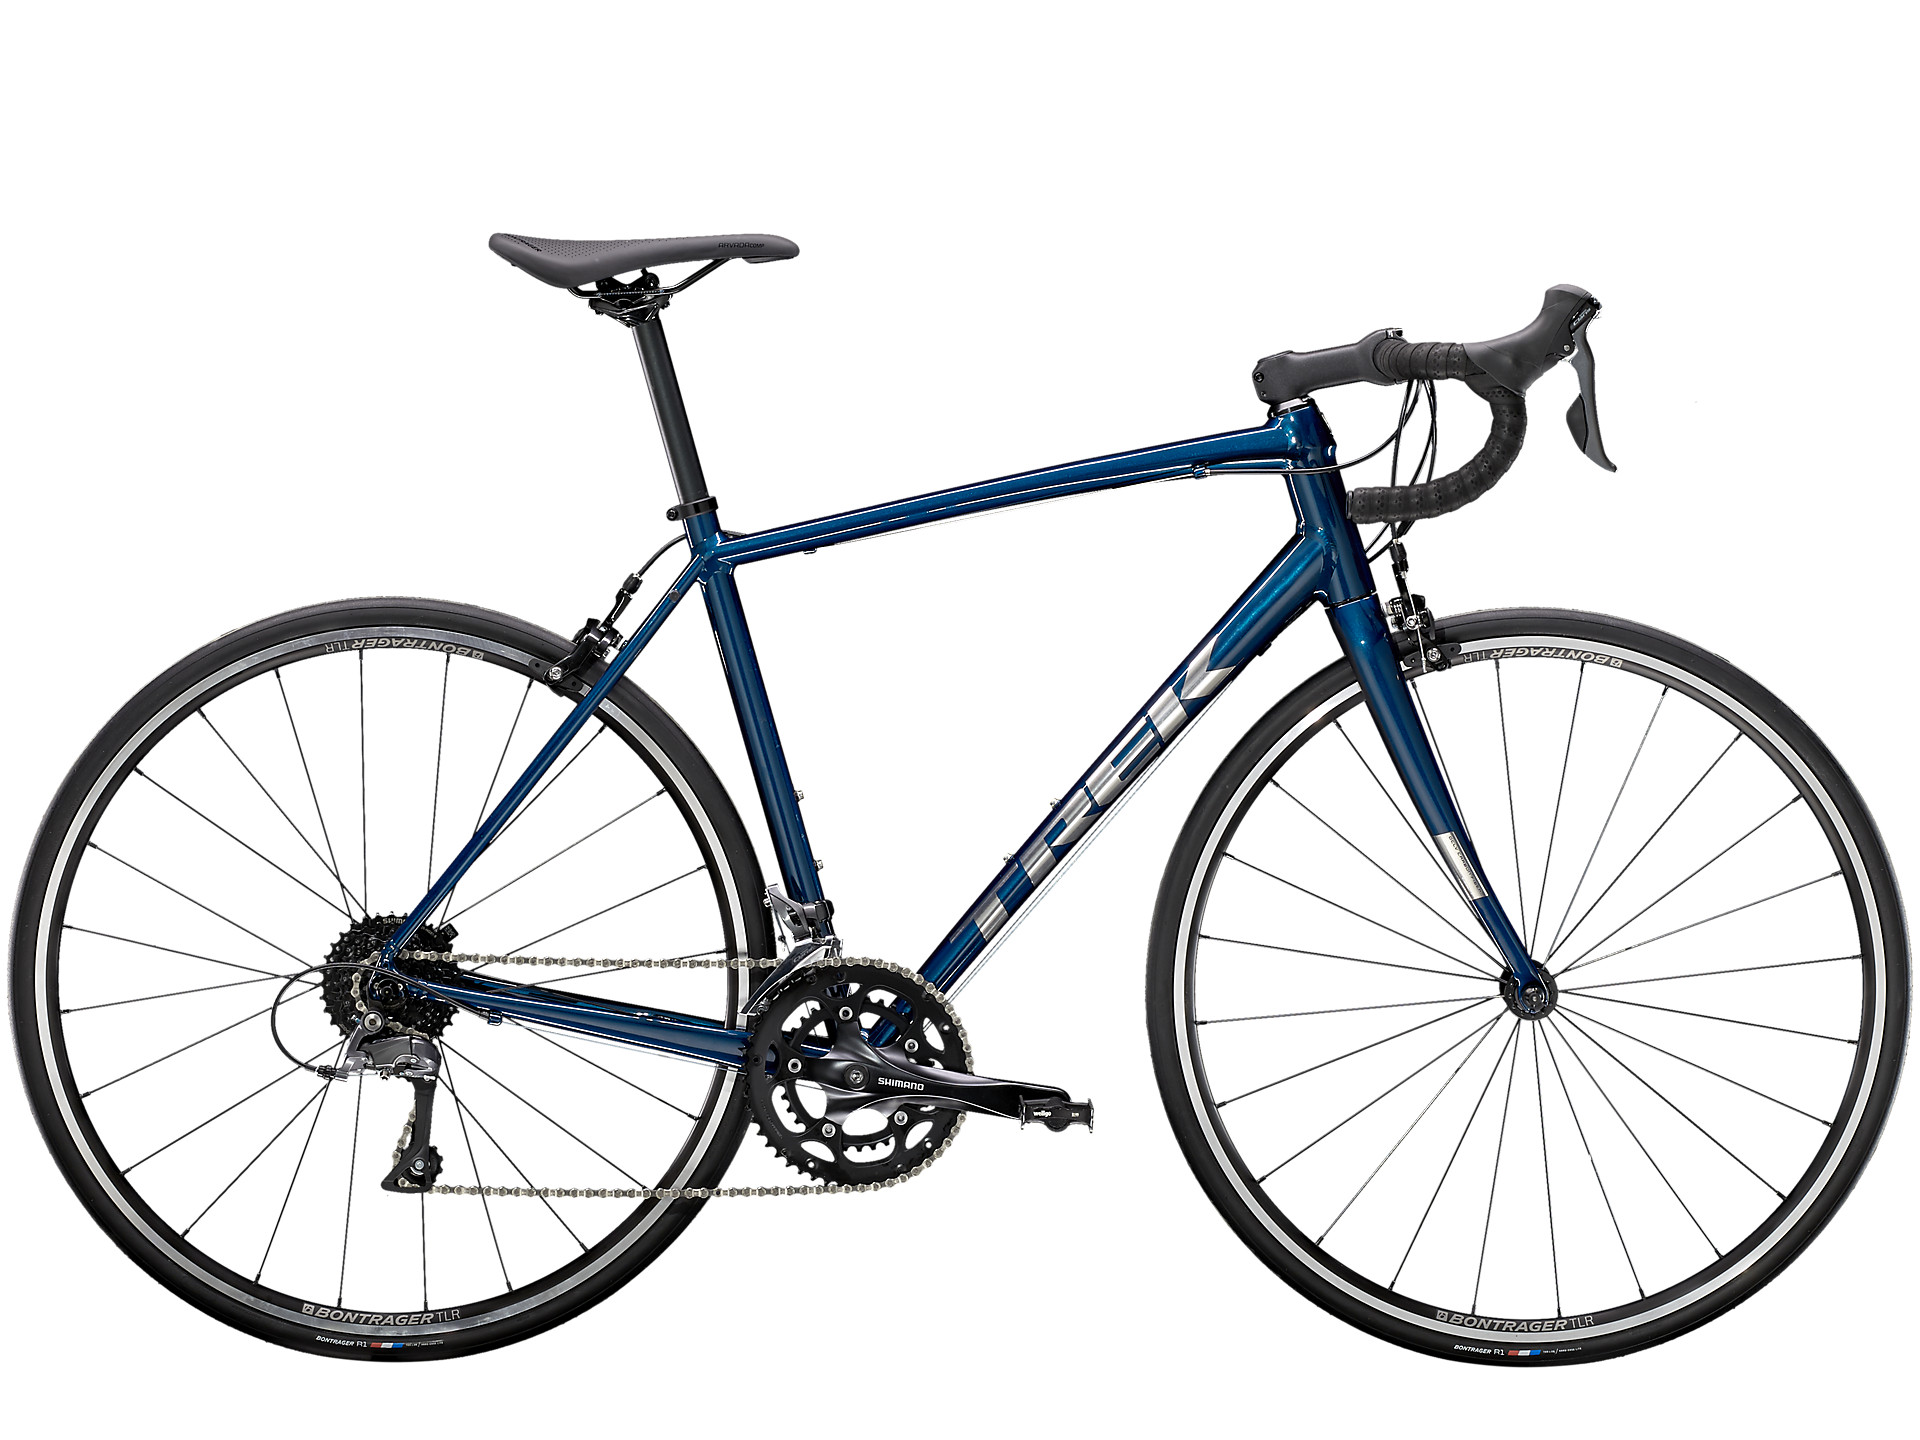 Dark blue Trek Domane AL 2 (Best Road Bike Under $1000) with rim brakes and Shimano Claris groupset